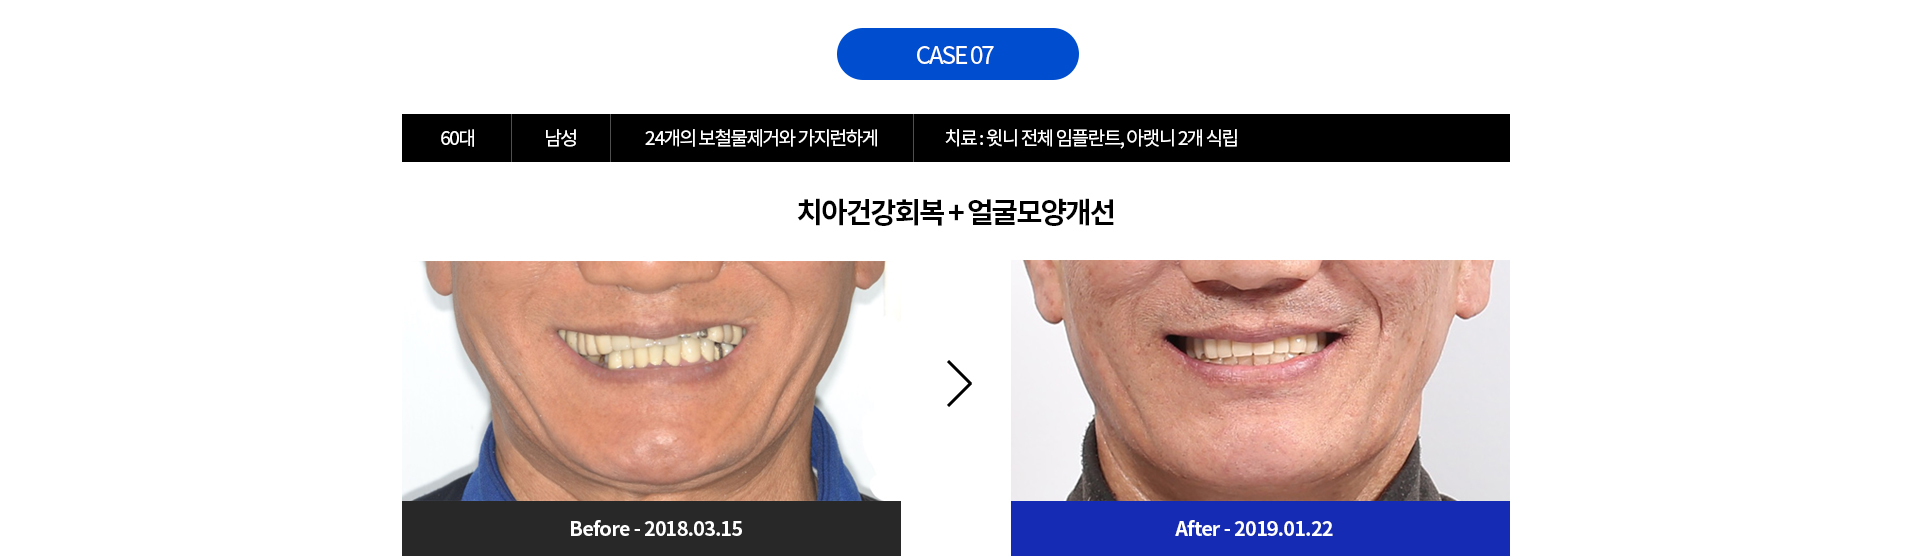 CASE 07 - 60대 남성 24개의 보철물제거와 가지런하게 | 치료 : 윗니 전체 임플란트, 아랫니 2개 식립 | 치아건강회복 + 얼굴모양개선